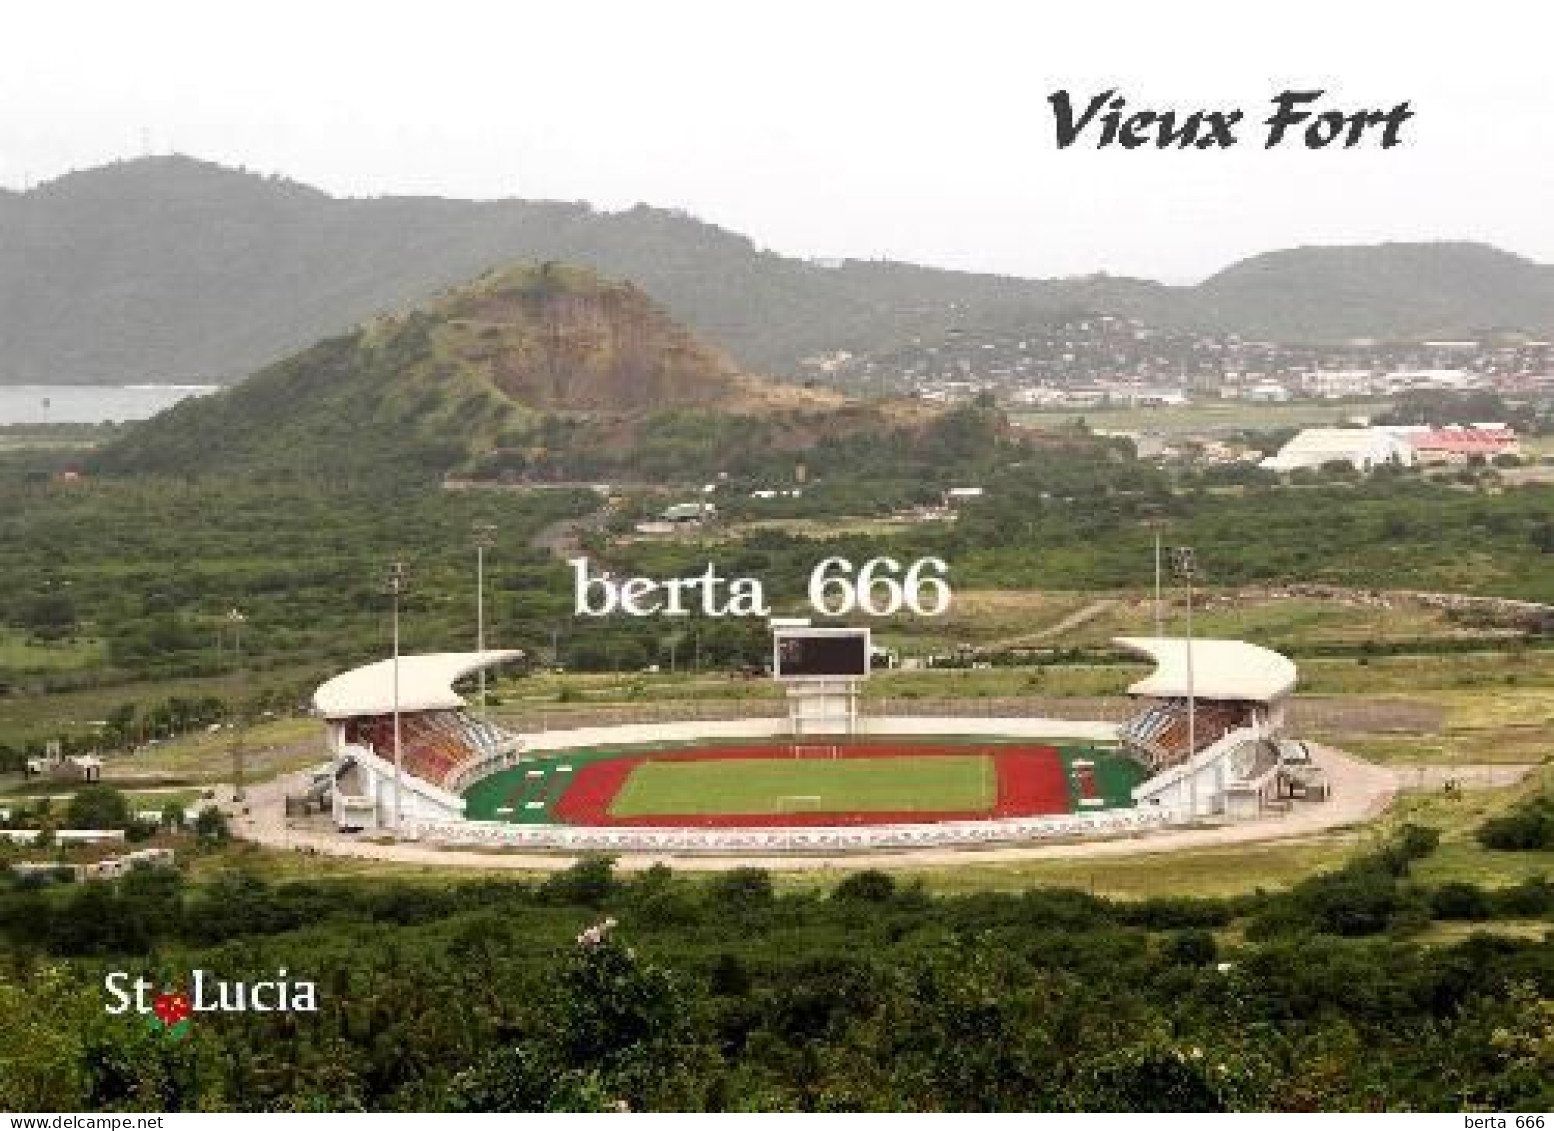 Saint Lucia Island Vieux Fort Stadium New Postcard - Saint Lucia